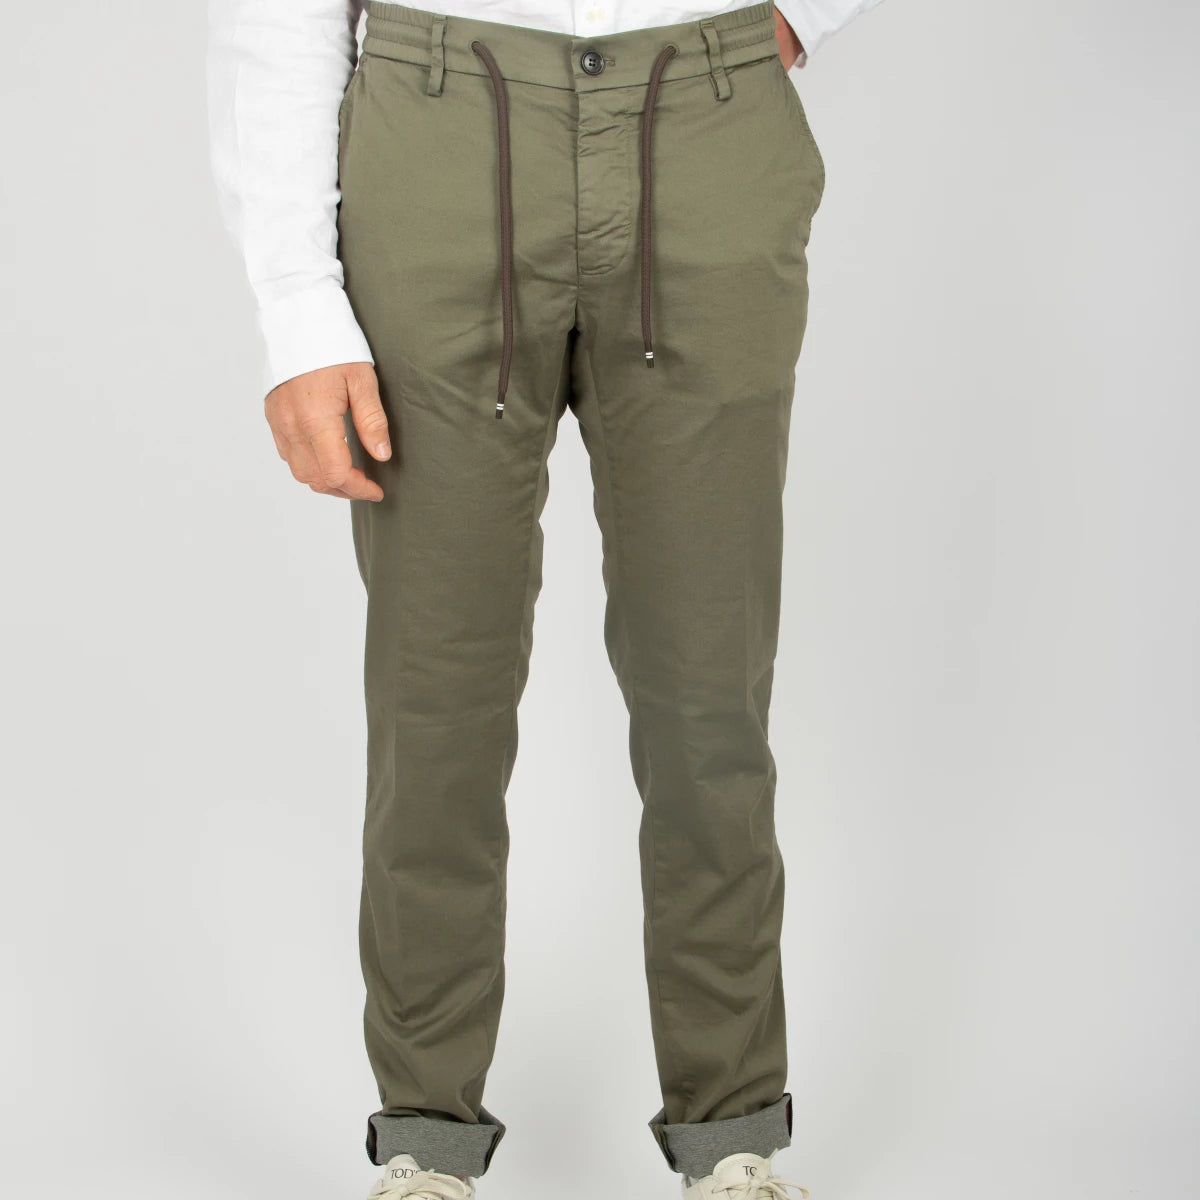 Mason's Pantalon groen | Milano Jogger